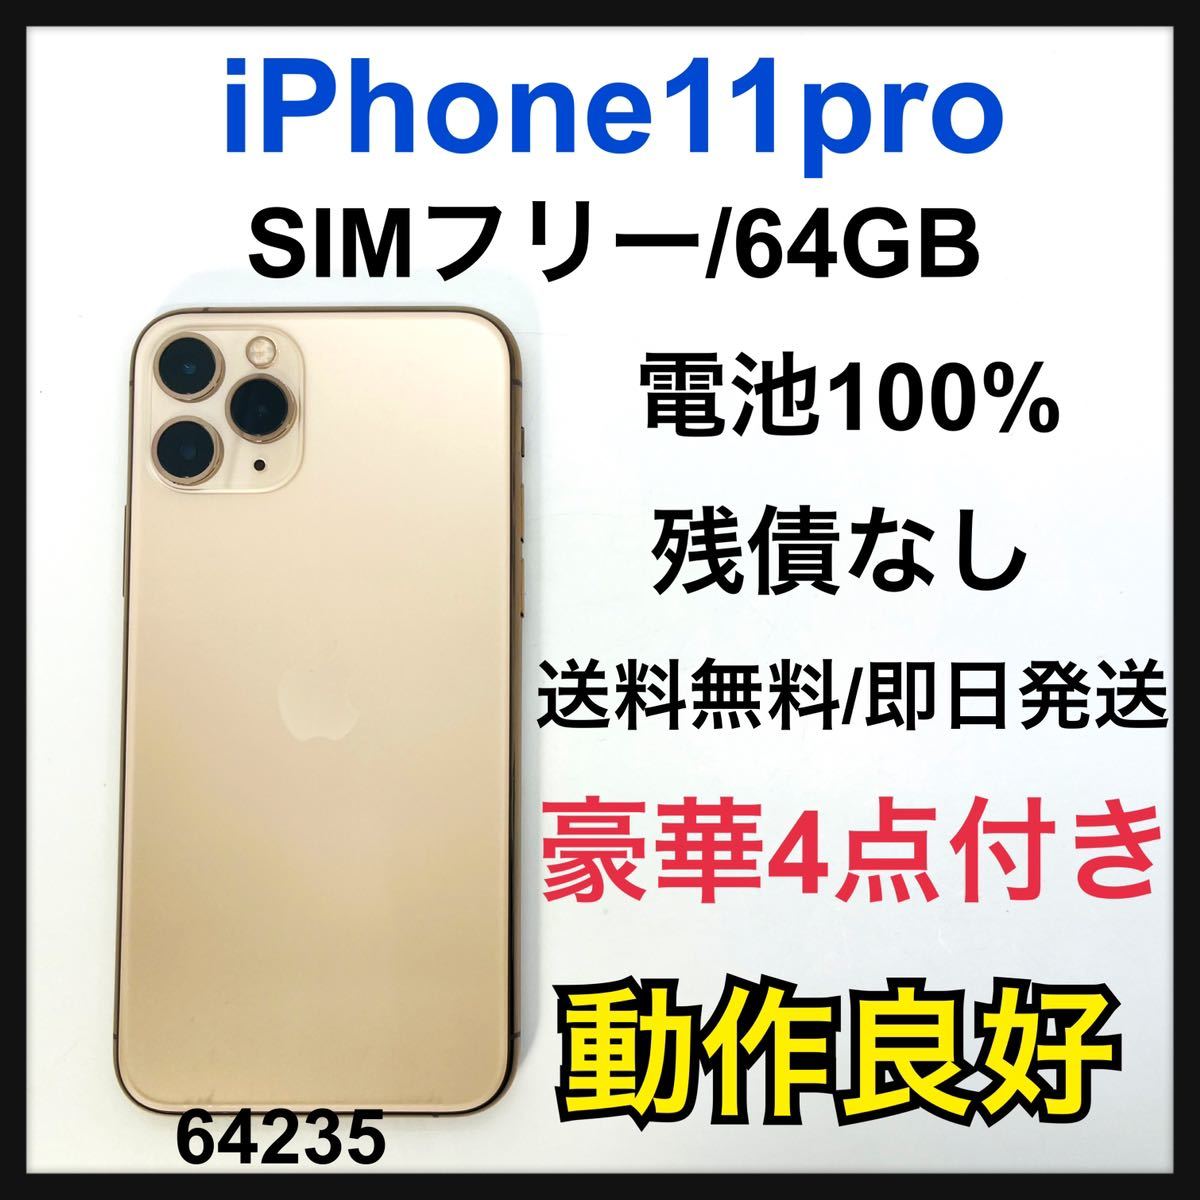 iPhone 11 Pro ゴールド 64 GB docomo SMフリー-